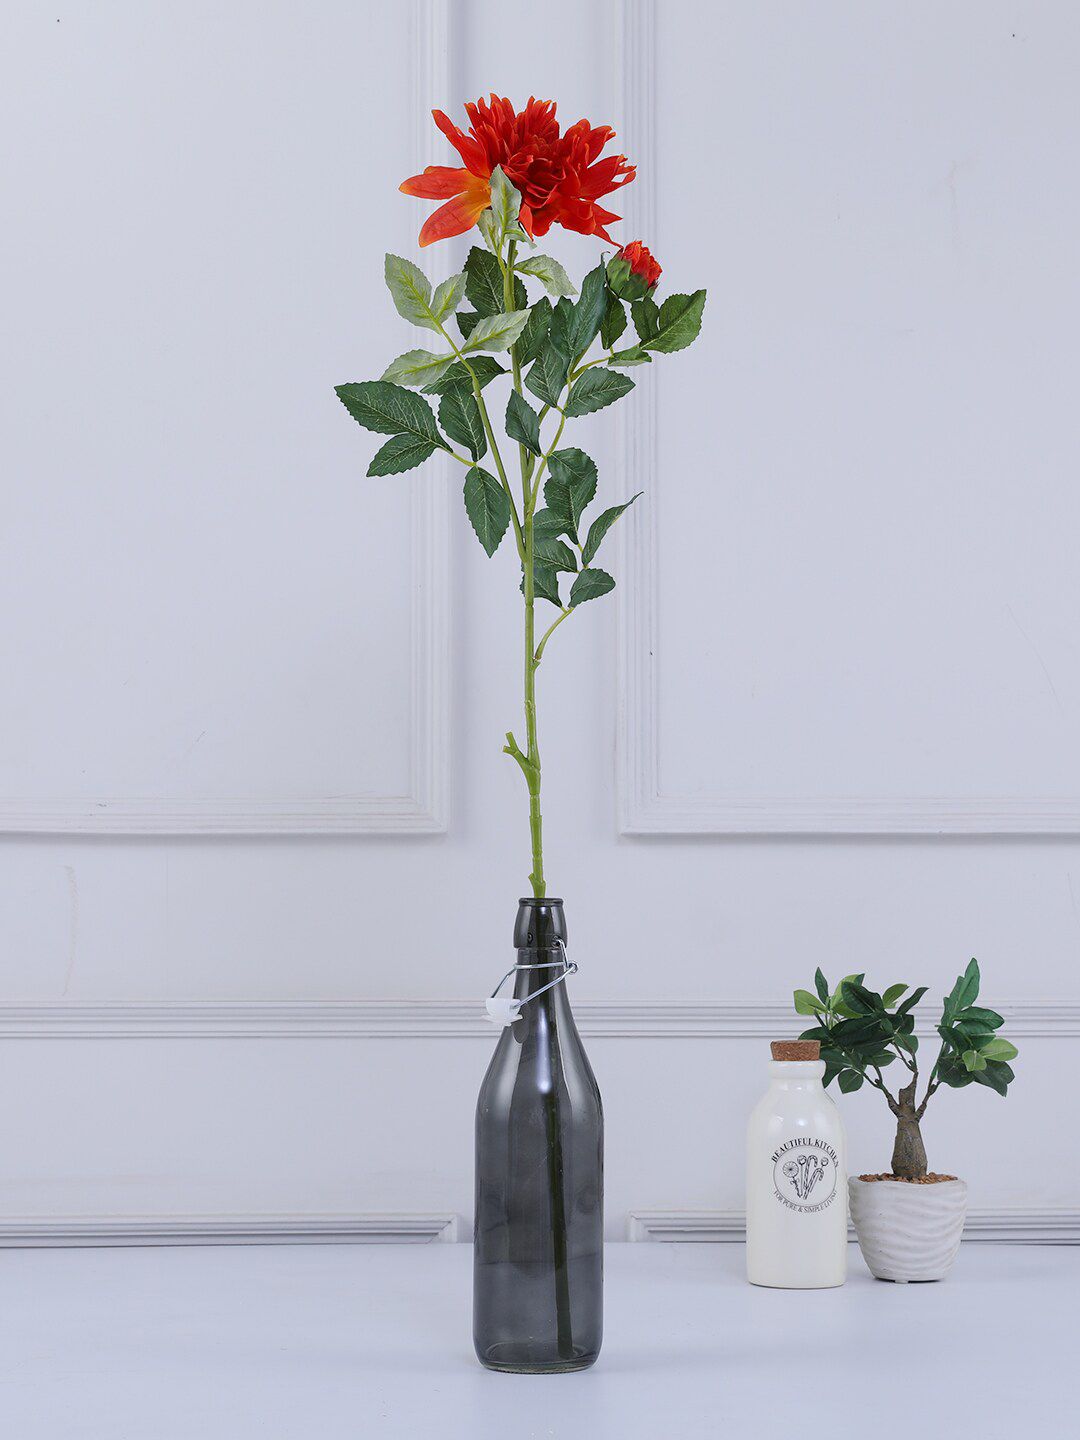 HomeTown Orange Crimson Artificial Dahlia Flower Stem With Buds Price in India